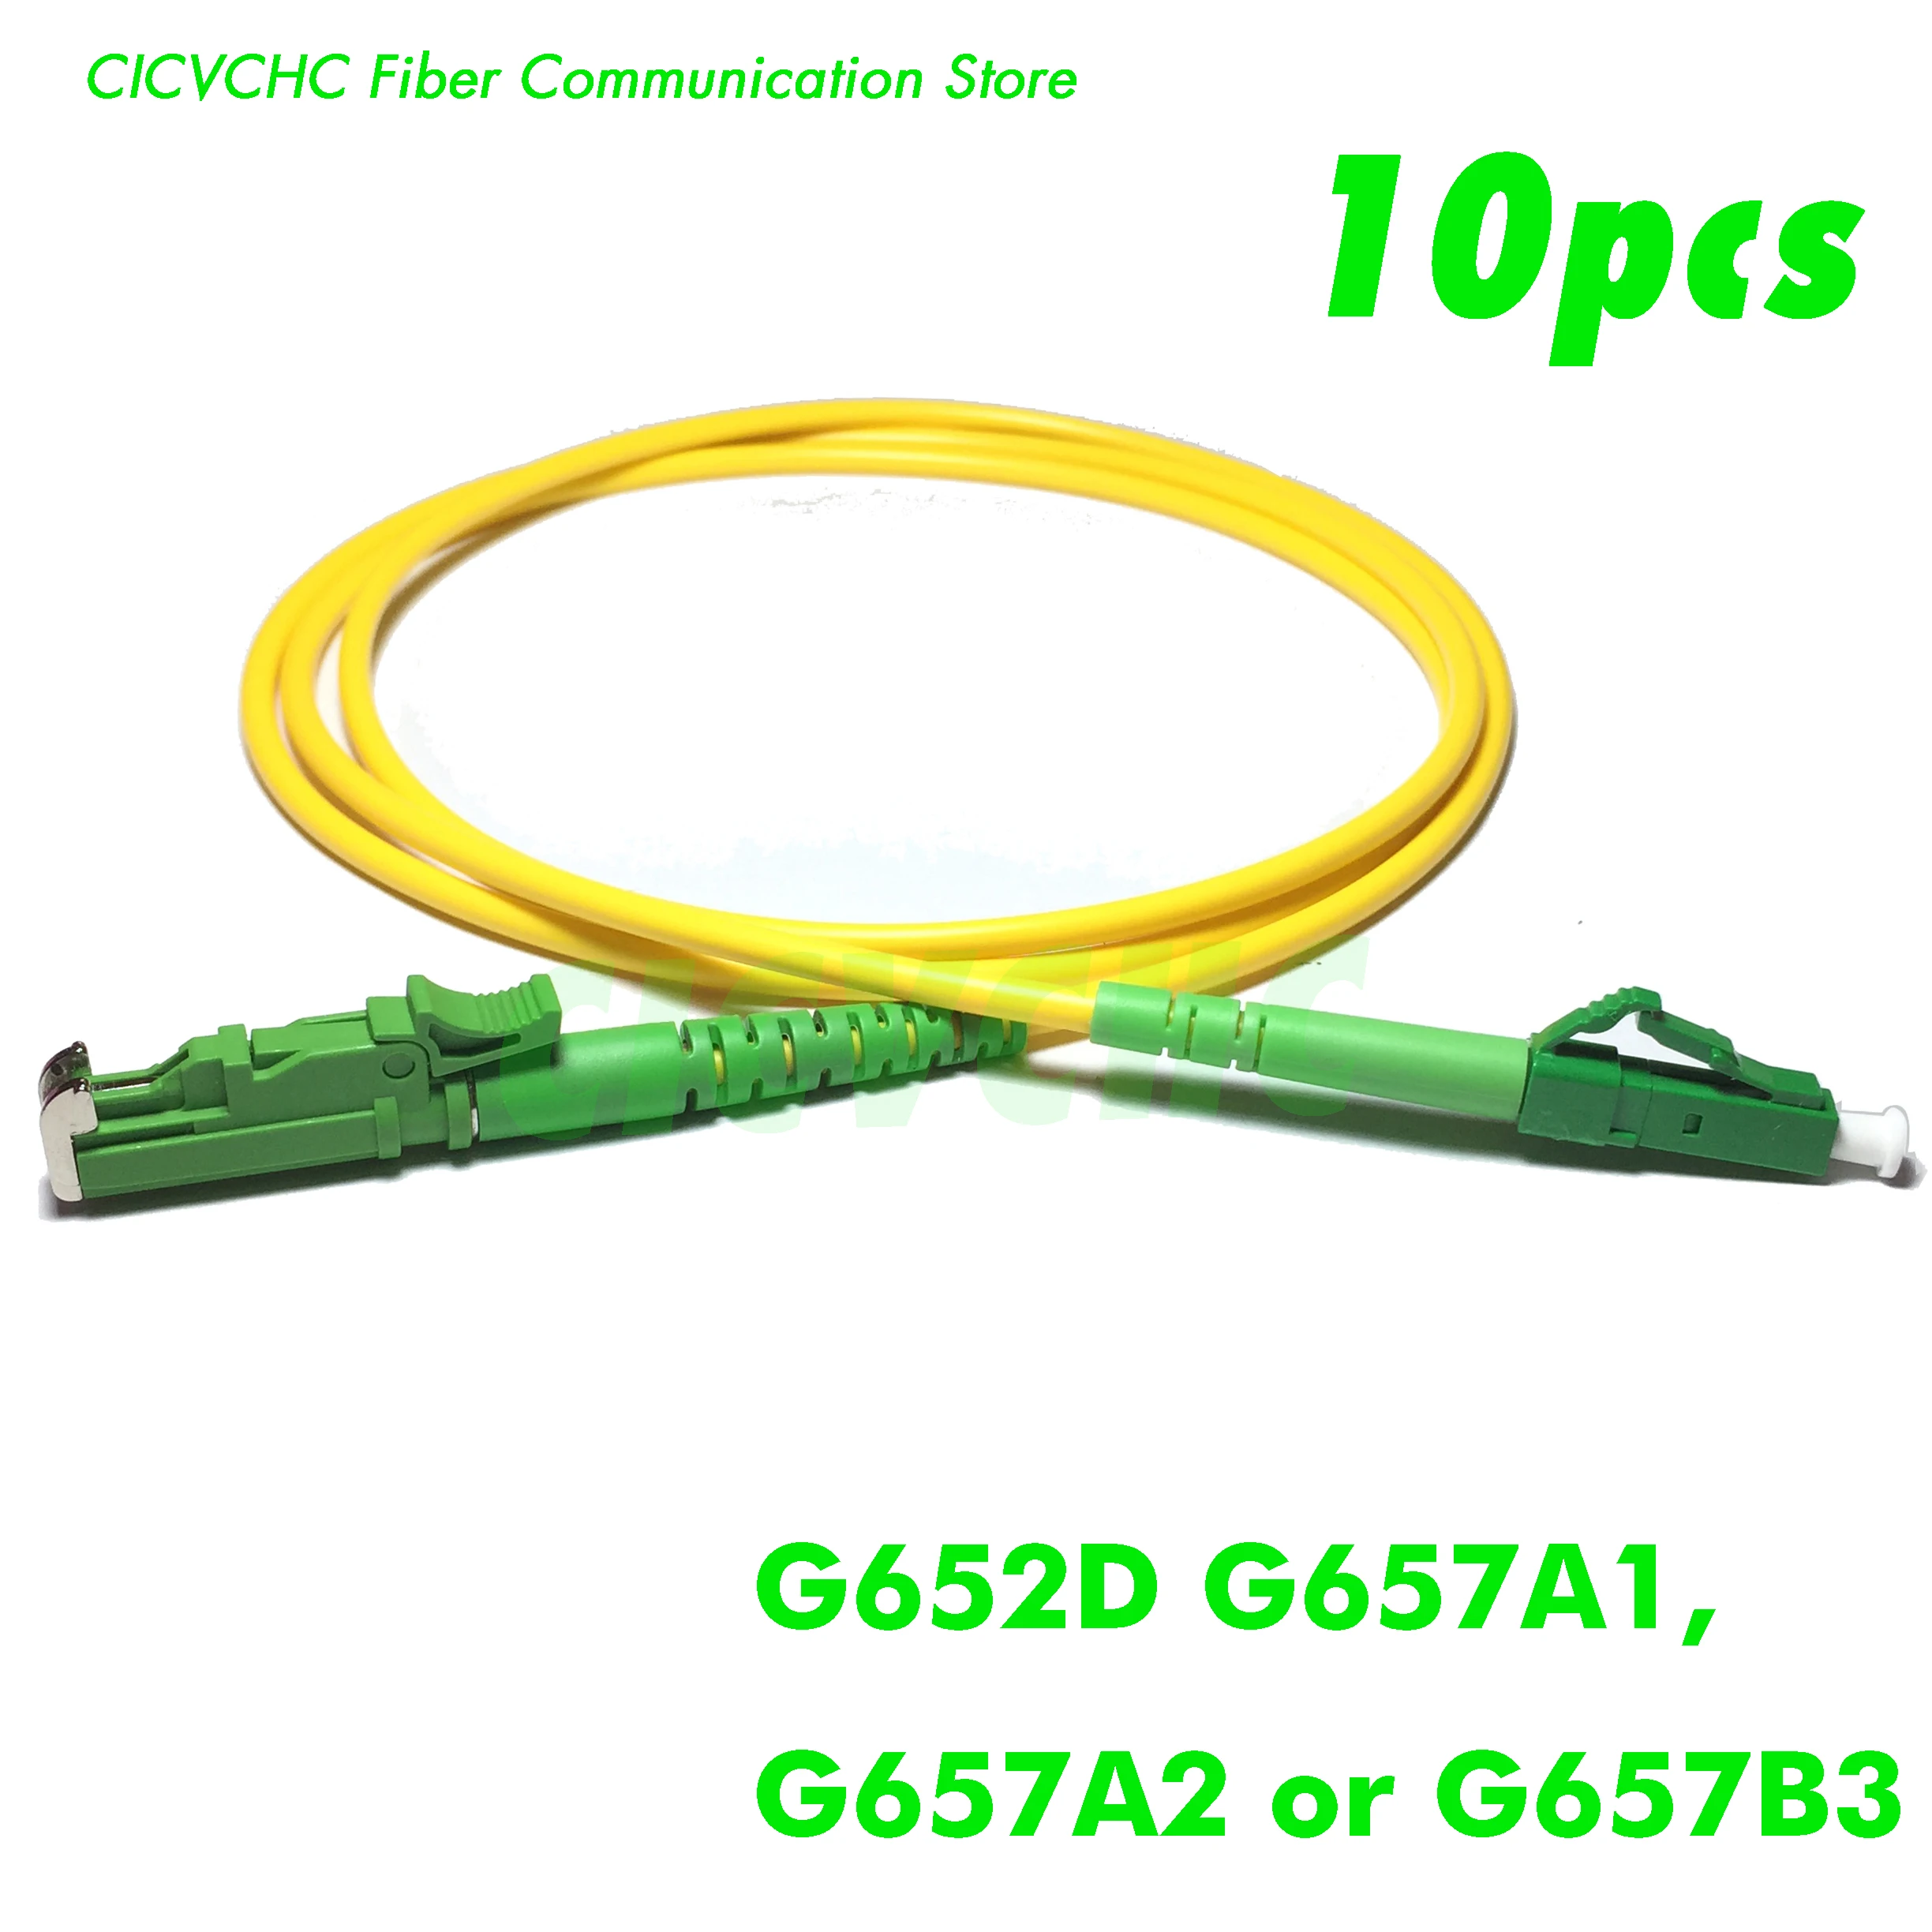 10pcs LSH(E2000)/APC-LC/APC Fiber Patchcord-Single Mode- G657B3, G657A2, G657A1 or G652D-3.0mm Cable Jumper